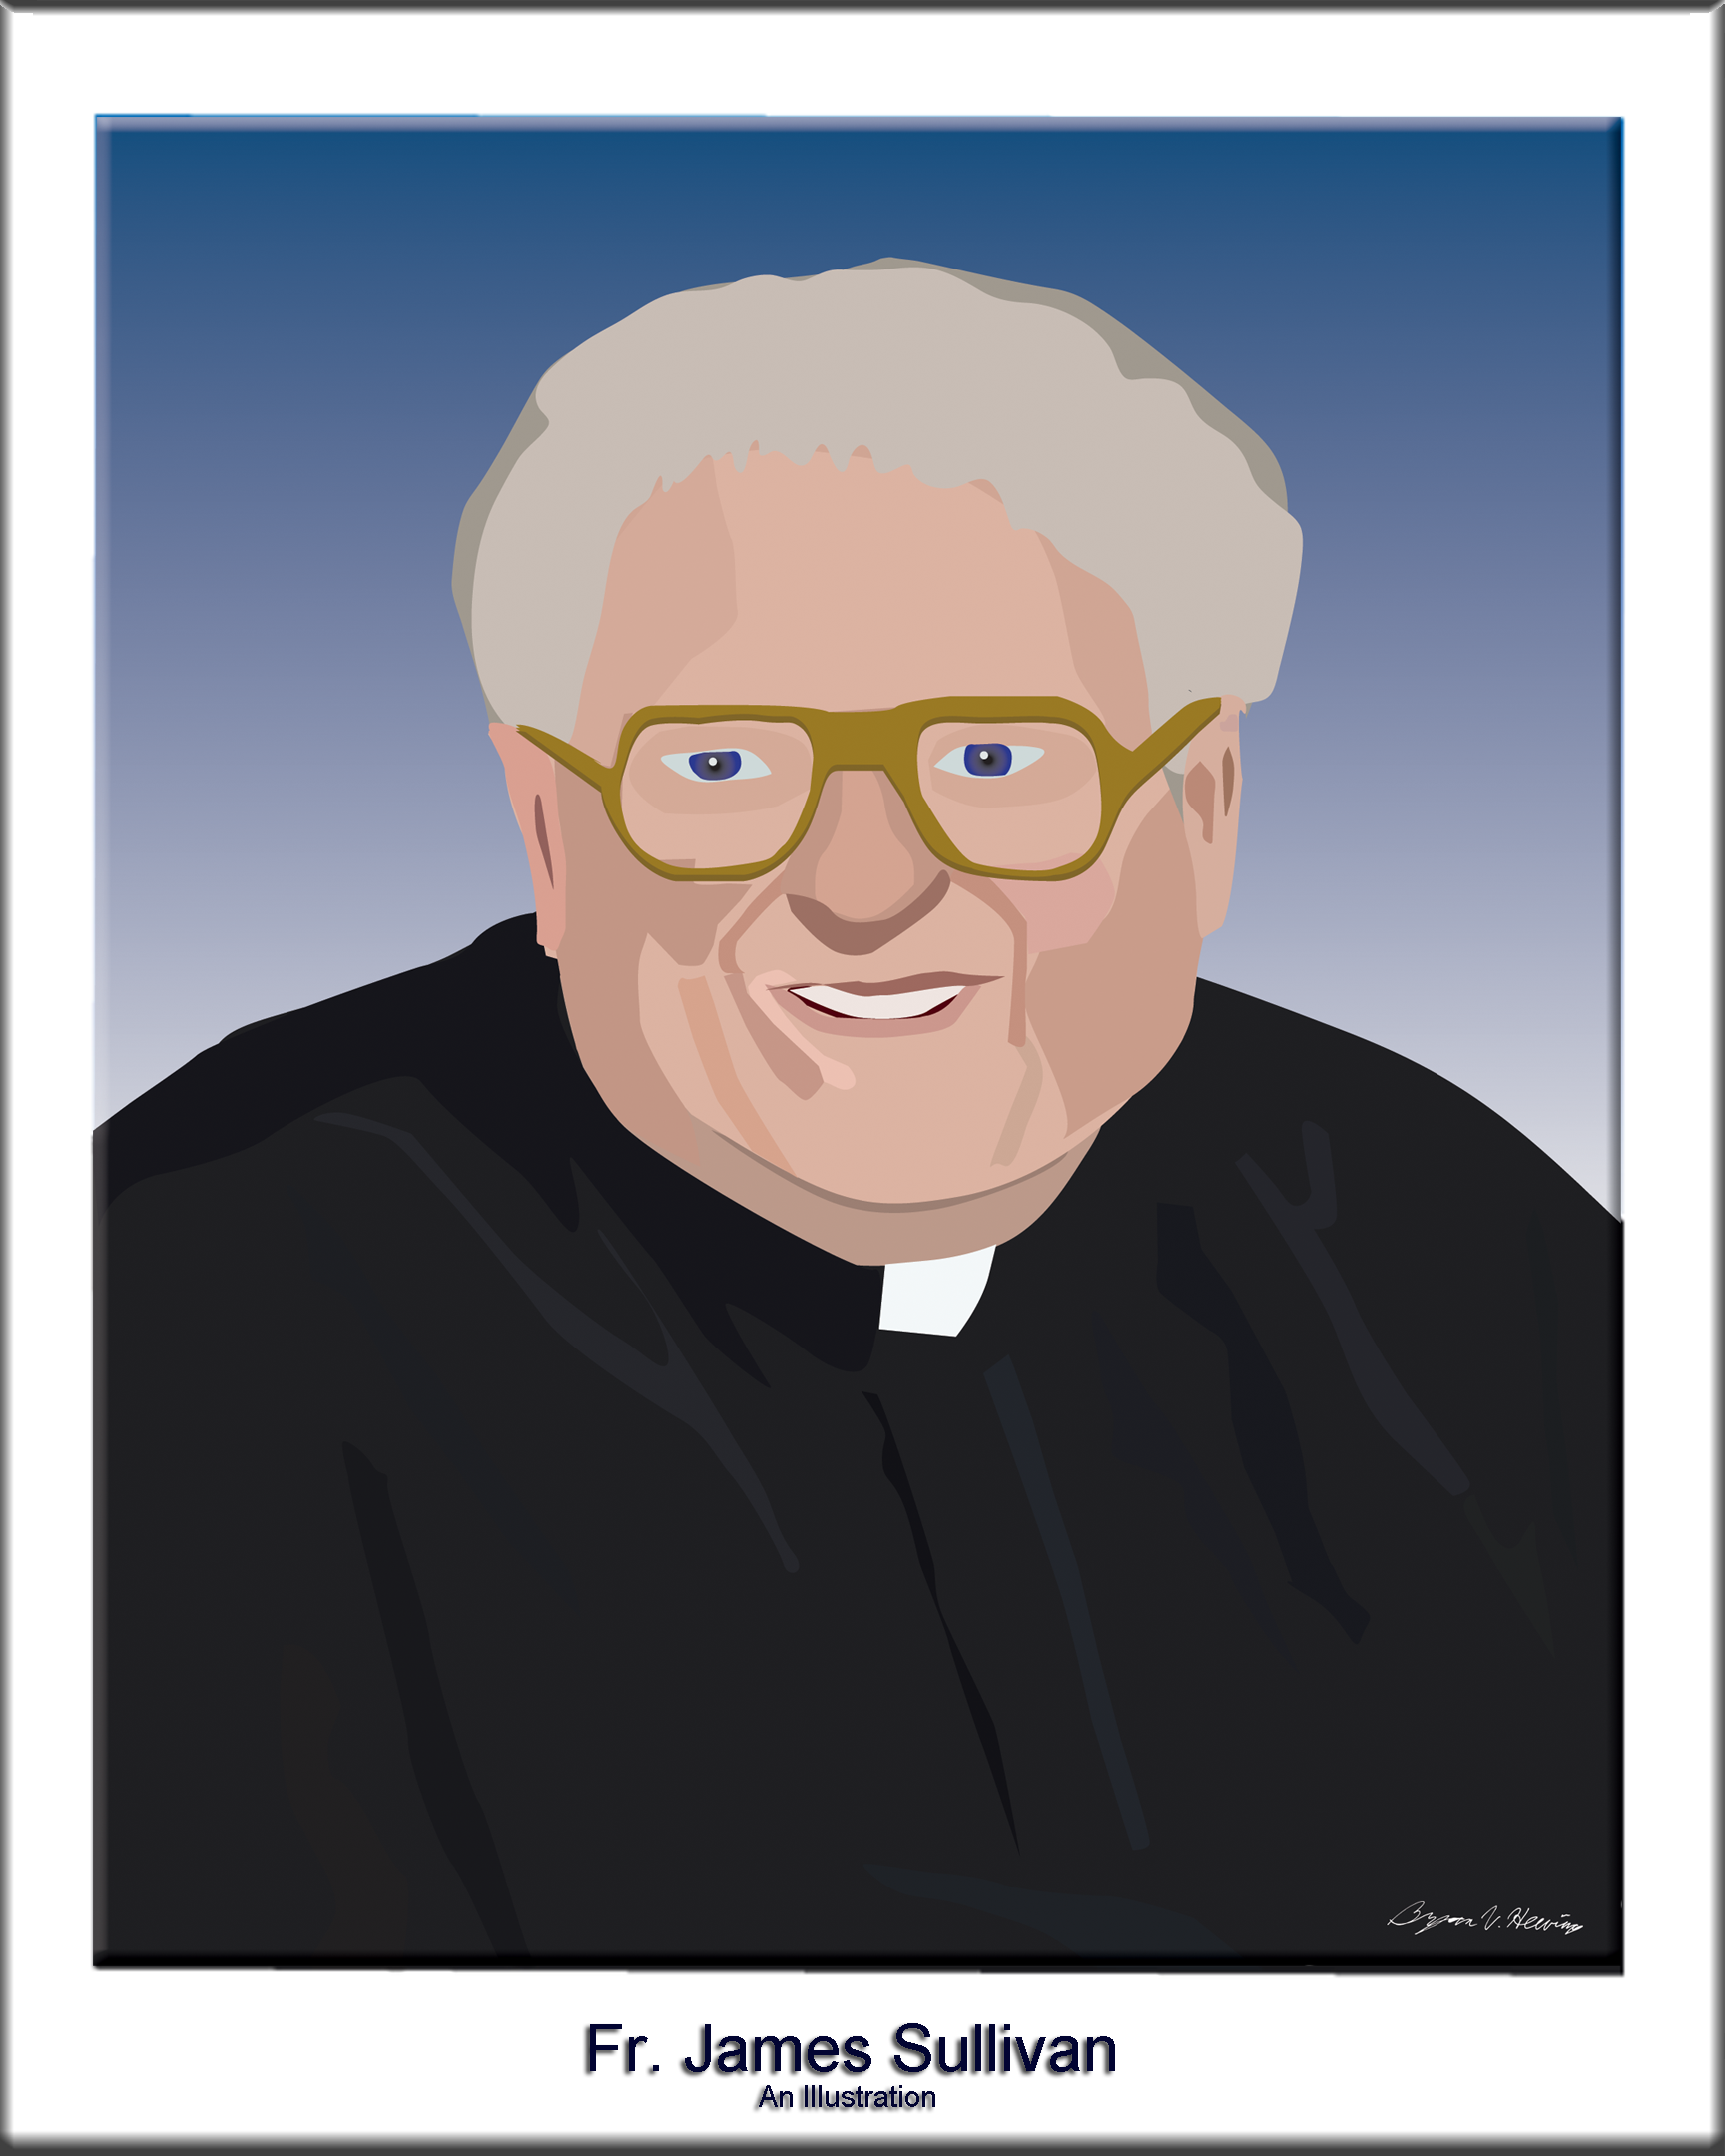 Fr. James Sullivan: An Illustration